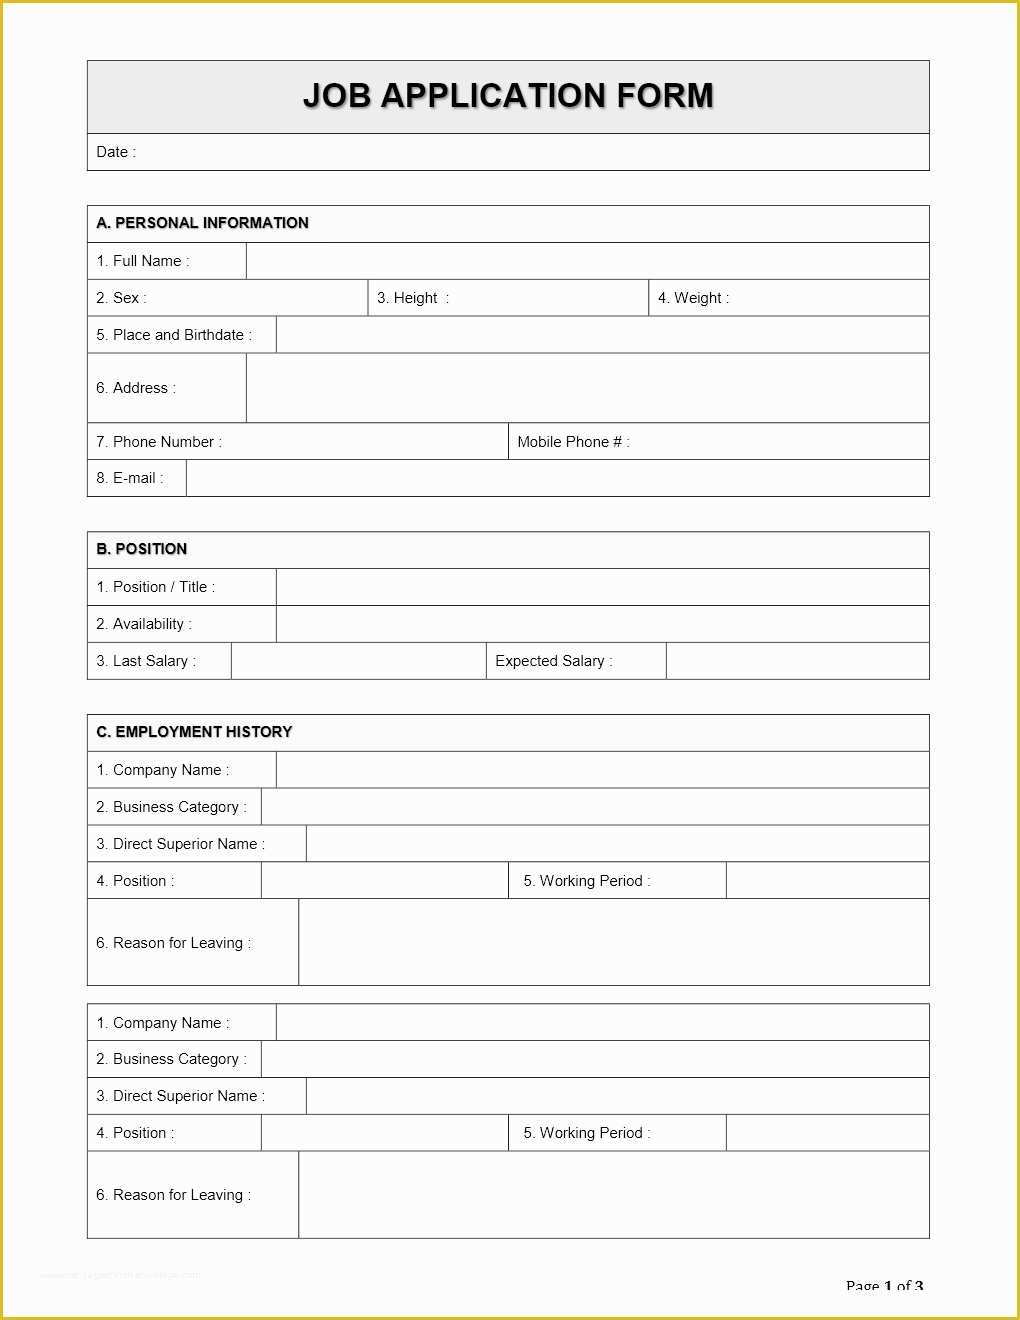 Free Microsoft Word Job Application Template Of Employee Job Application form